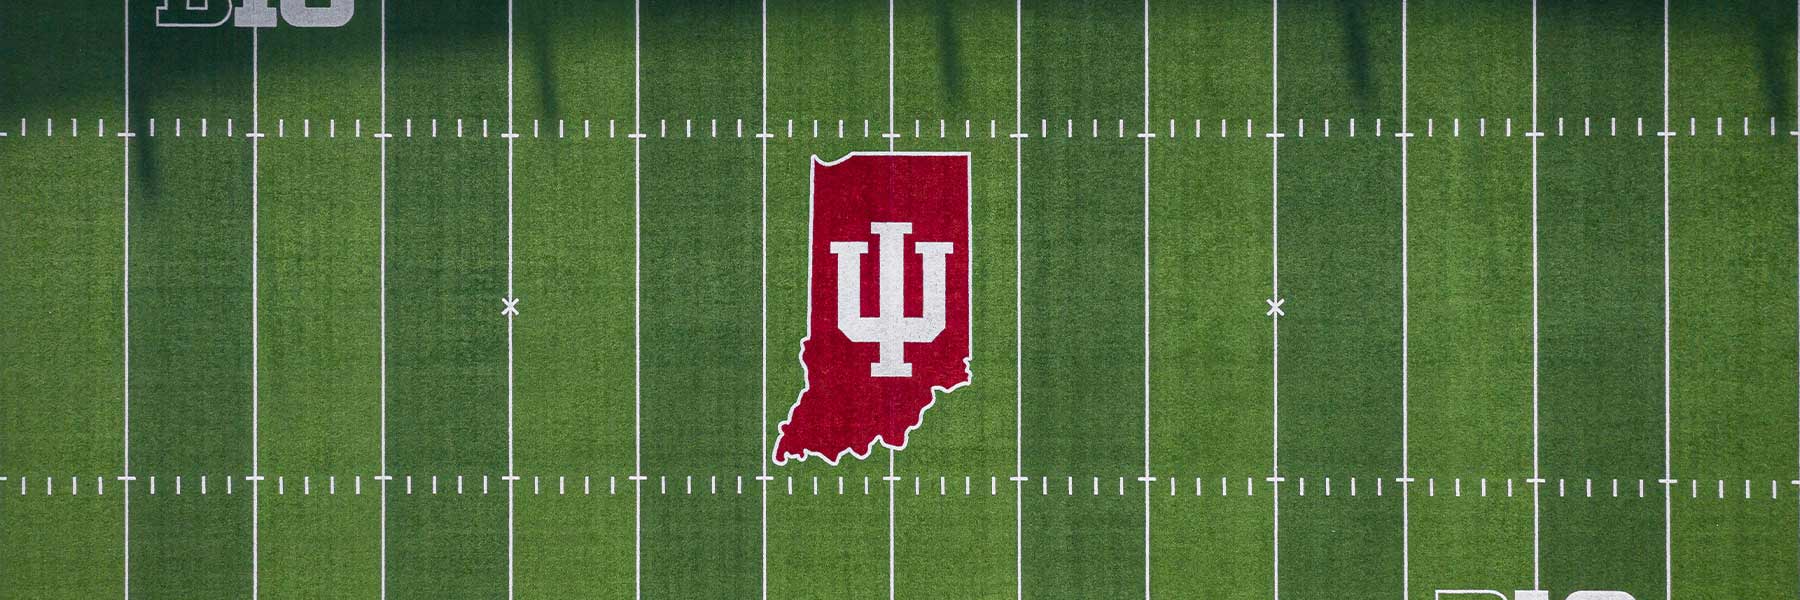 Indiana University Football Schedule 2022 Athletics: Hoosier Life: Indiana University Bloomington